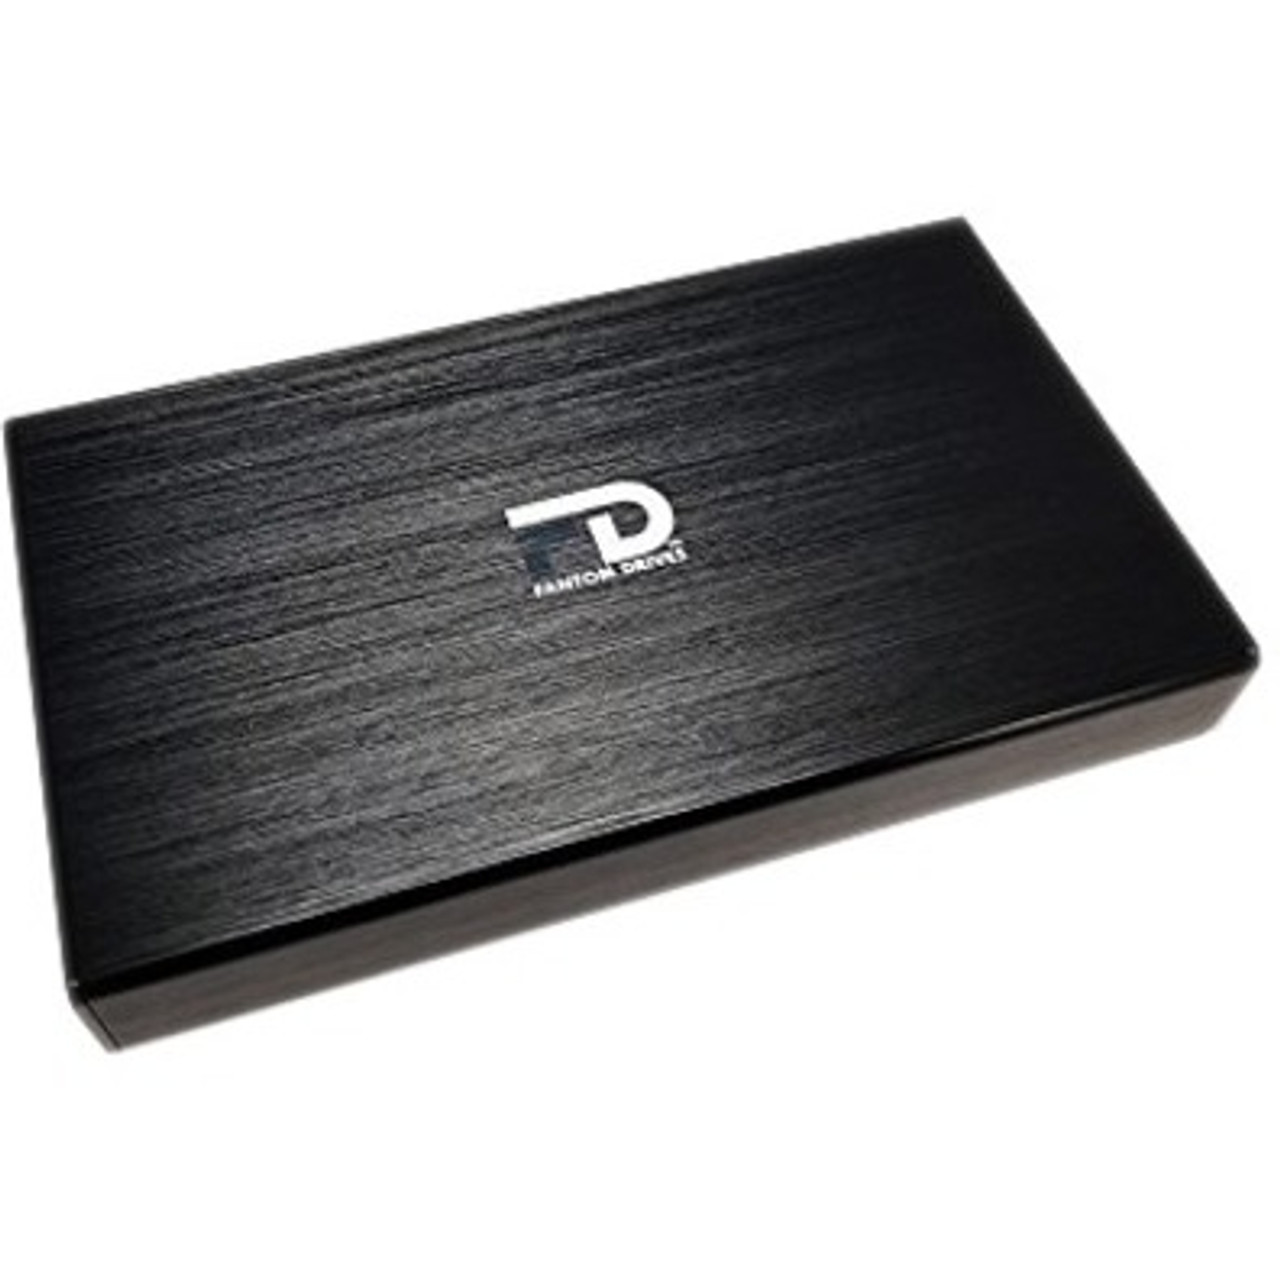 Fantom Drives 2TB External Hard Drive - GFORCE 3 - USB 3, eSATA, Aluminum, Black